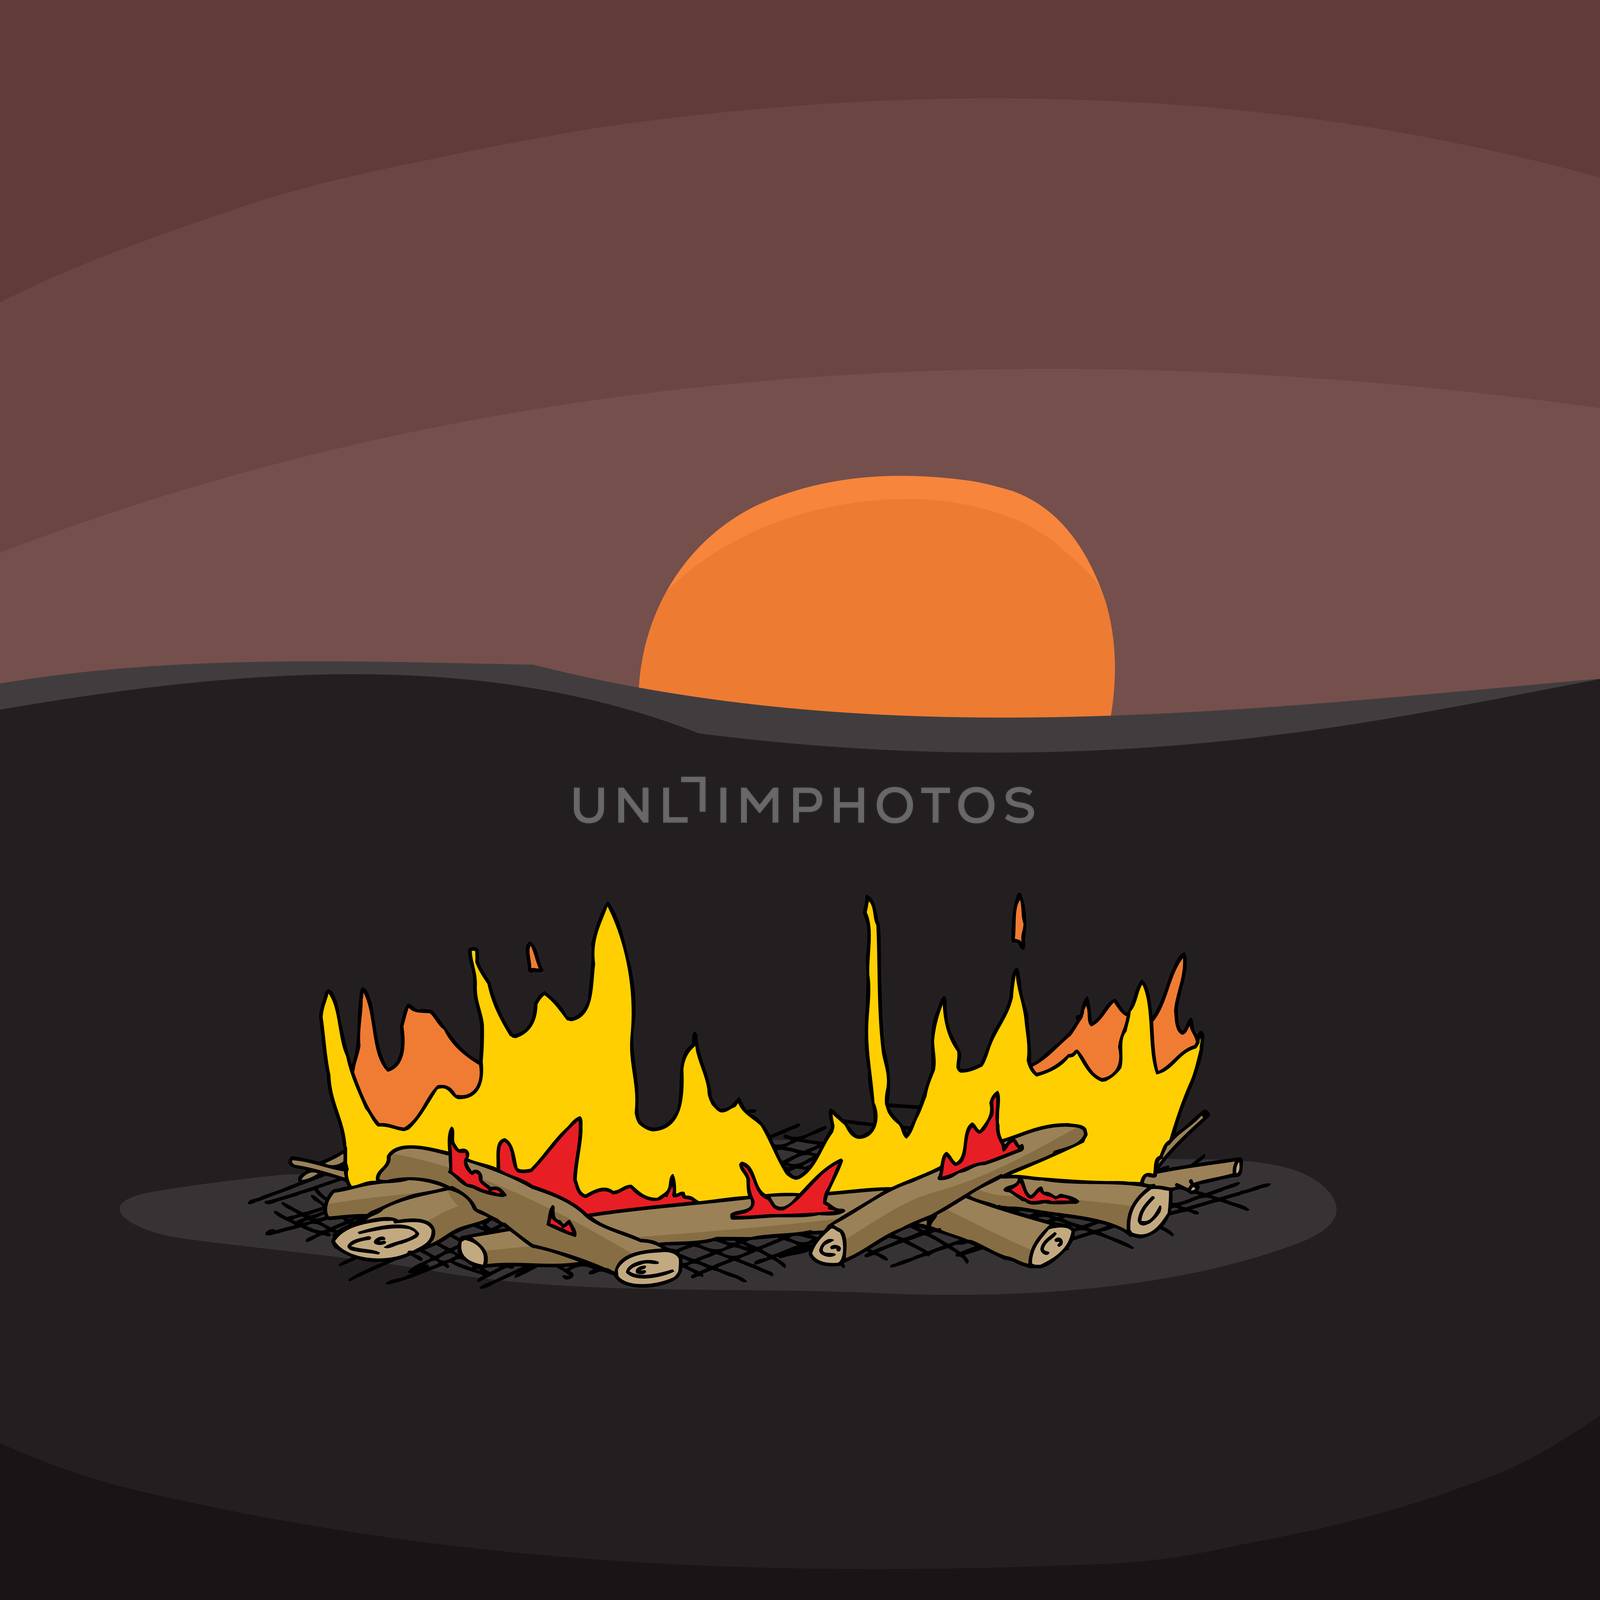 Hand drawn cartoon campfire scene with sunset